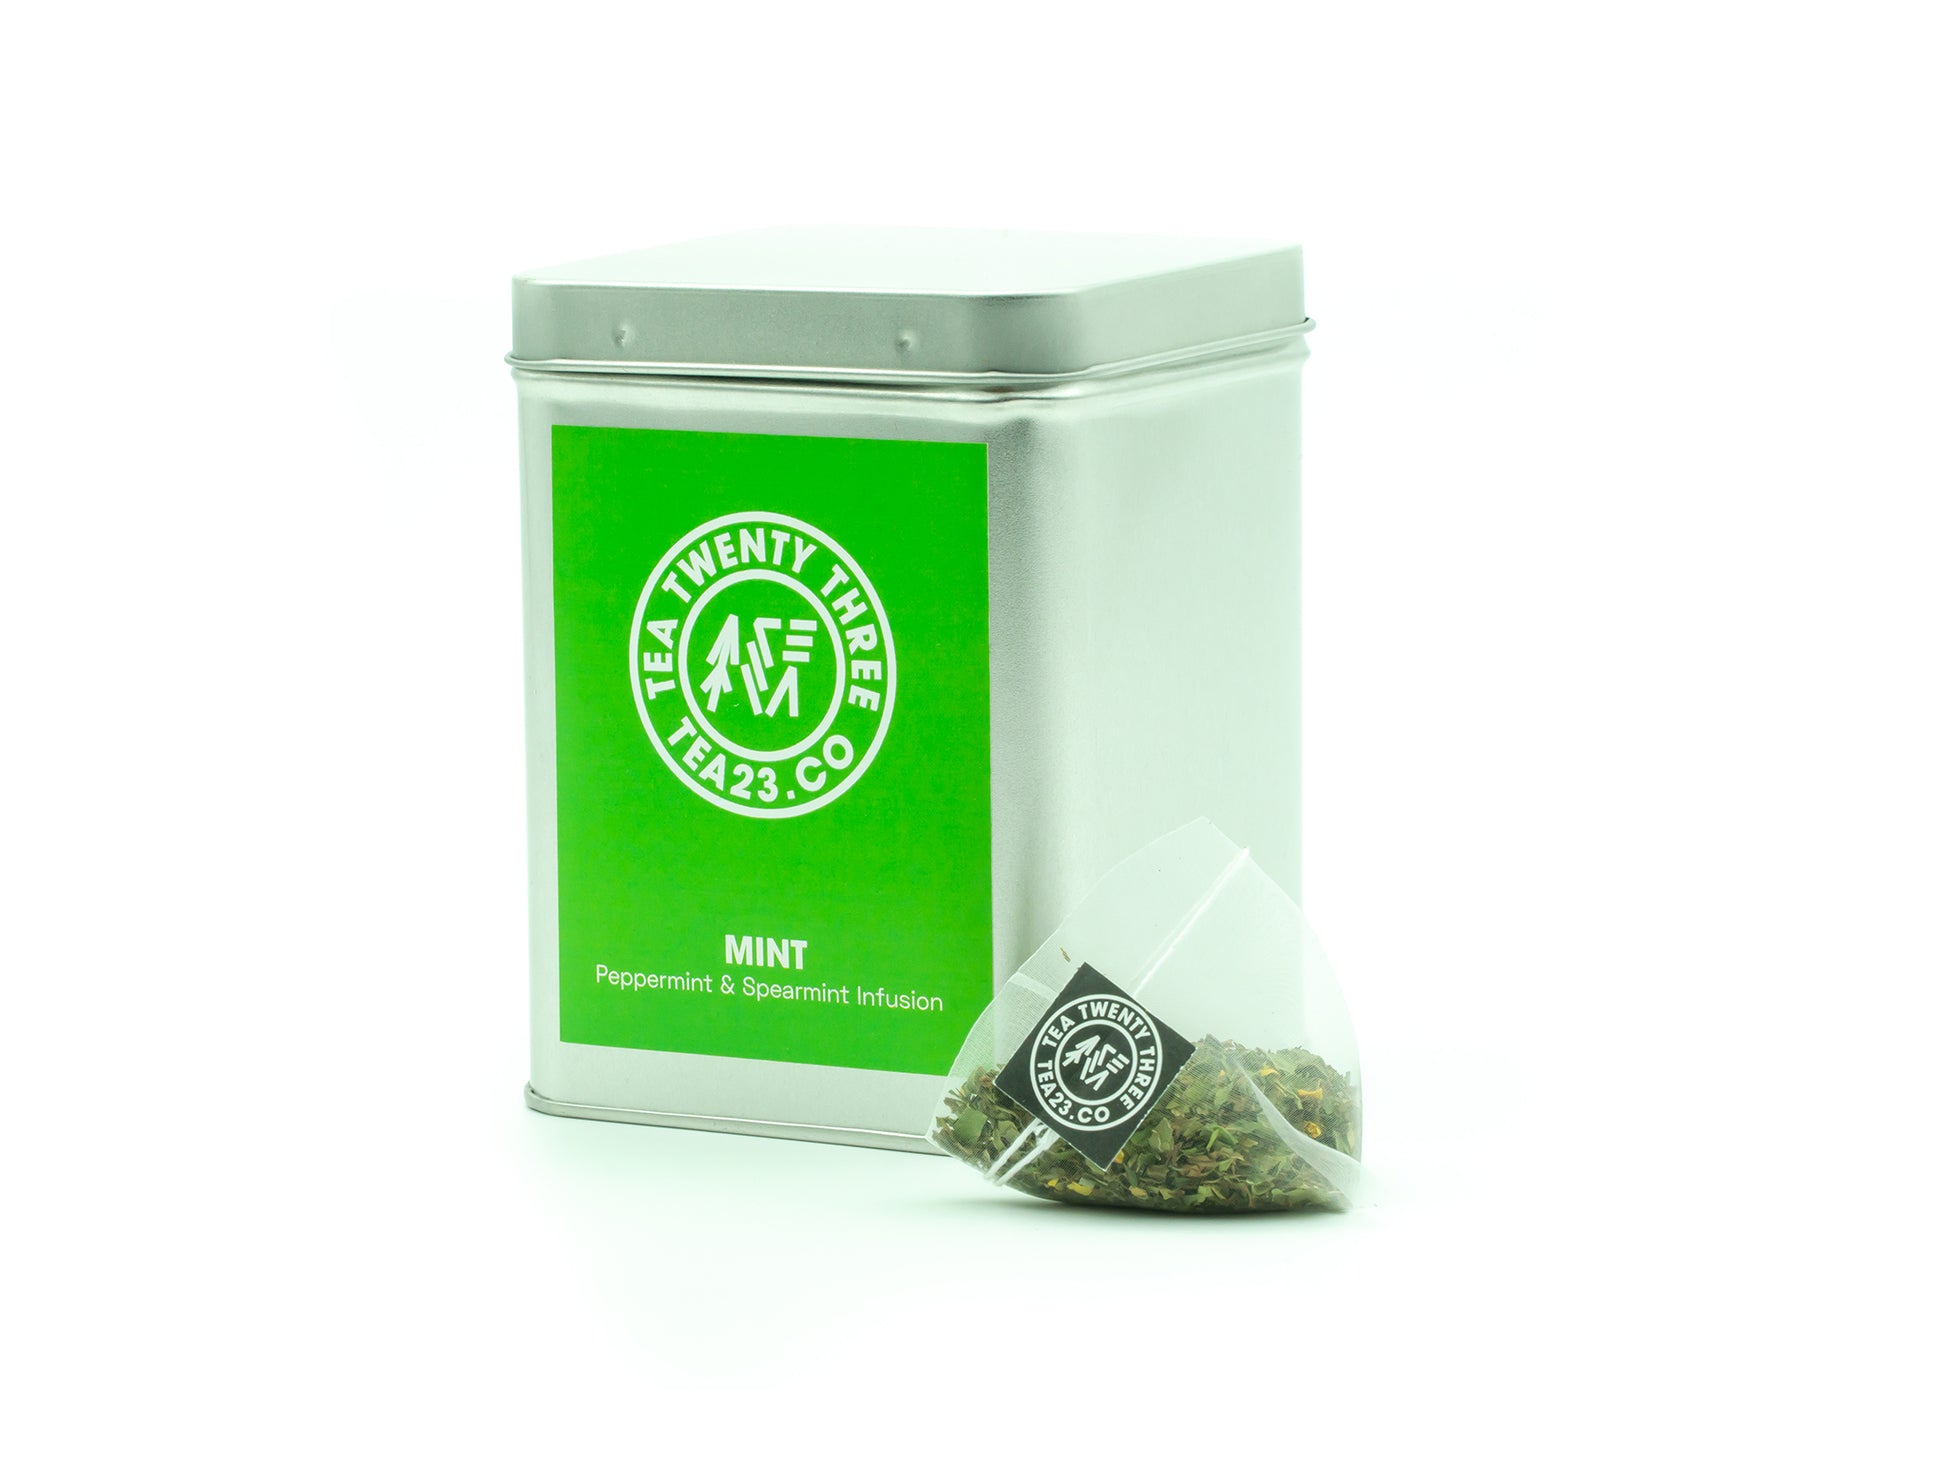 A Mint Tea pyramid tea bag from TEA23 sits in front of a tea caddy